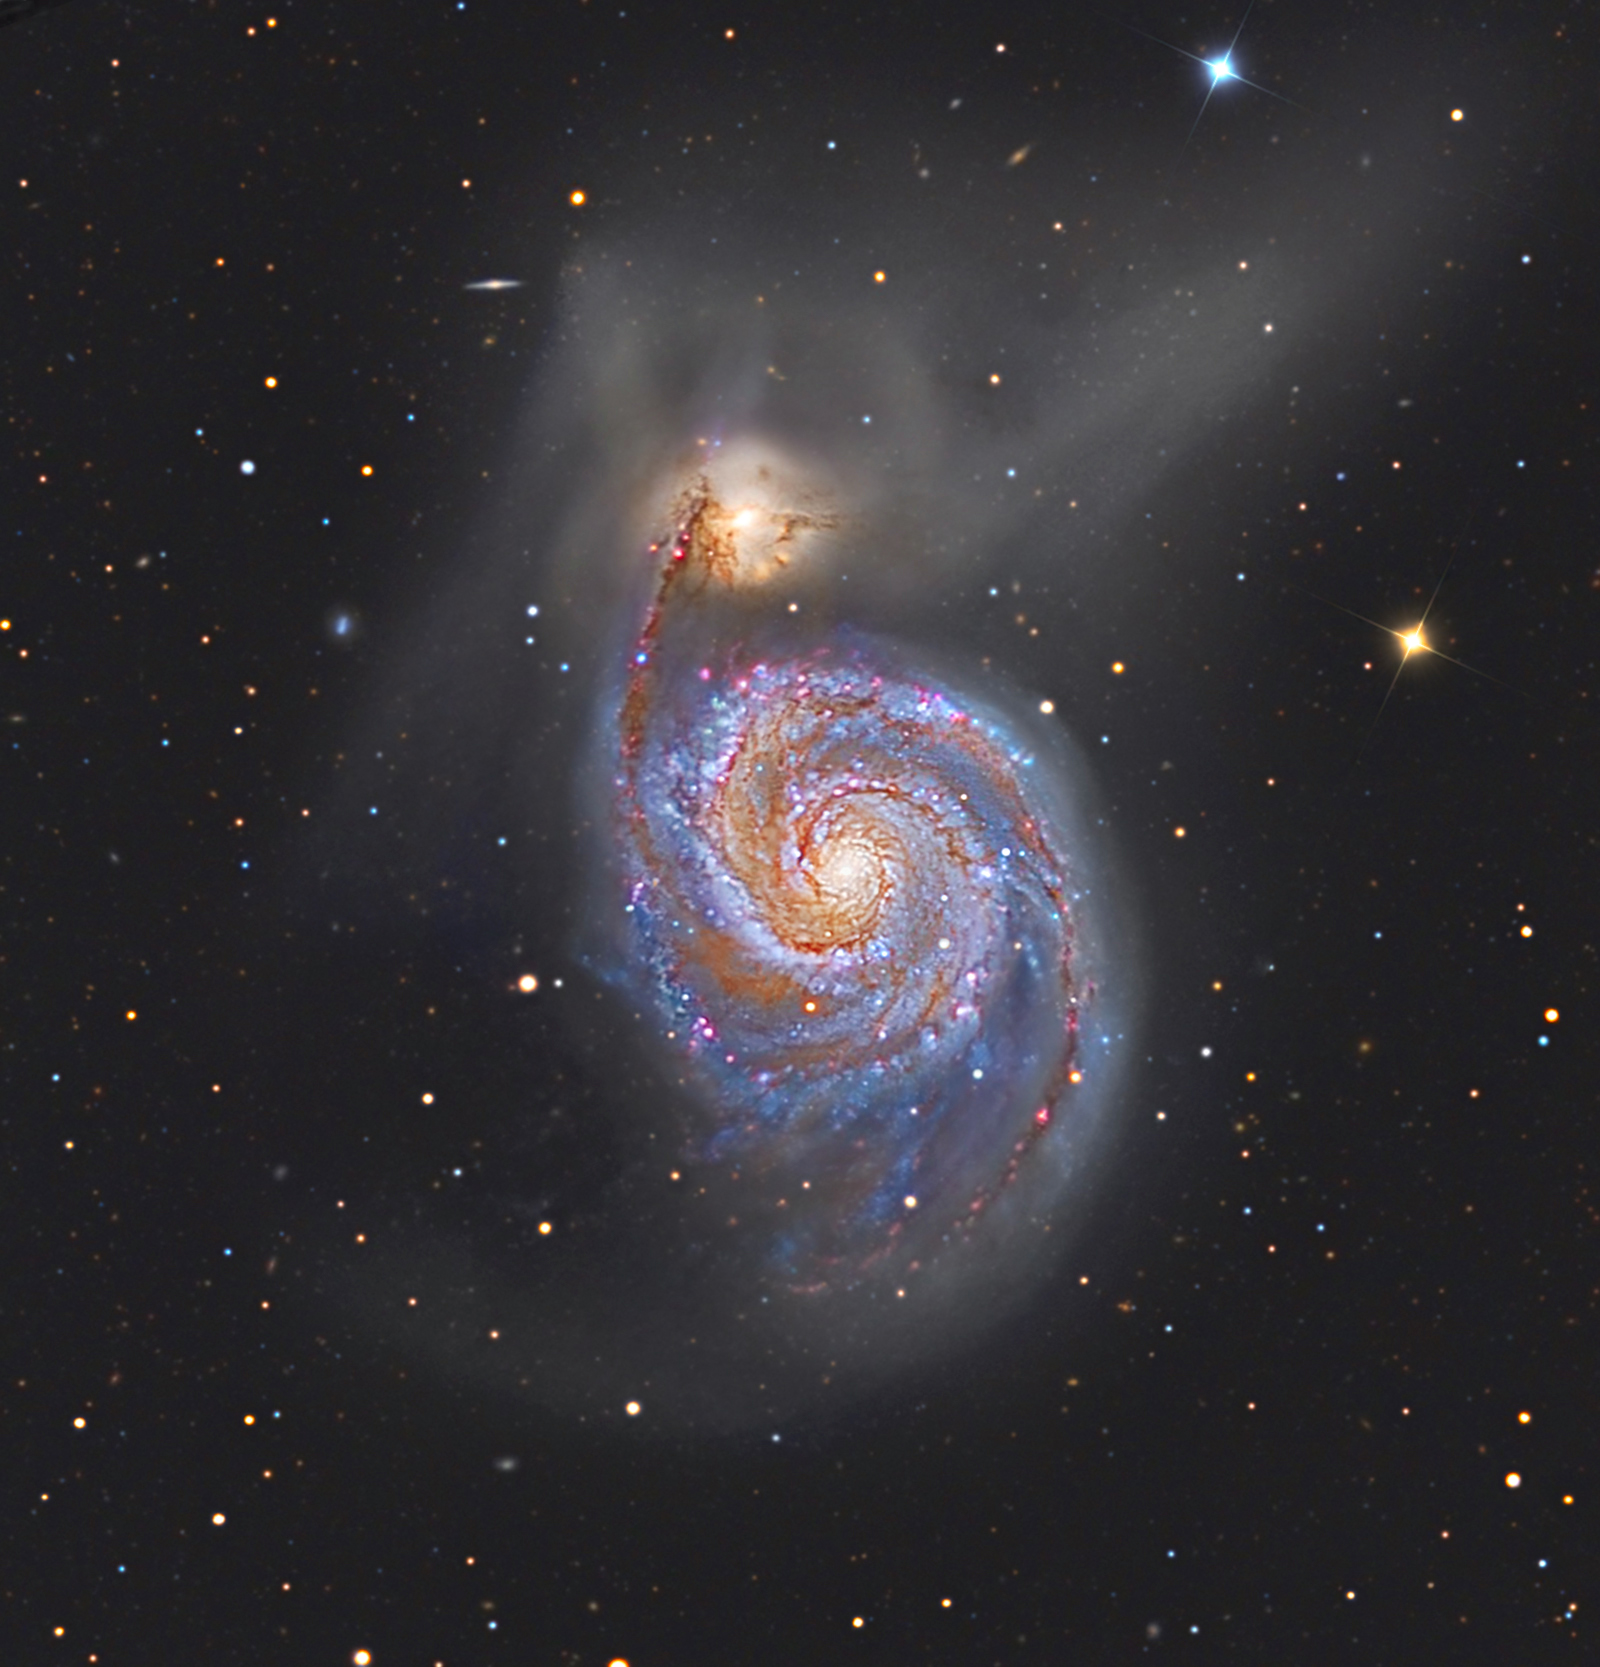 APOD: 2012 June 2 - M51: The Whirlpool Galaxy